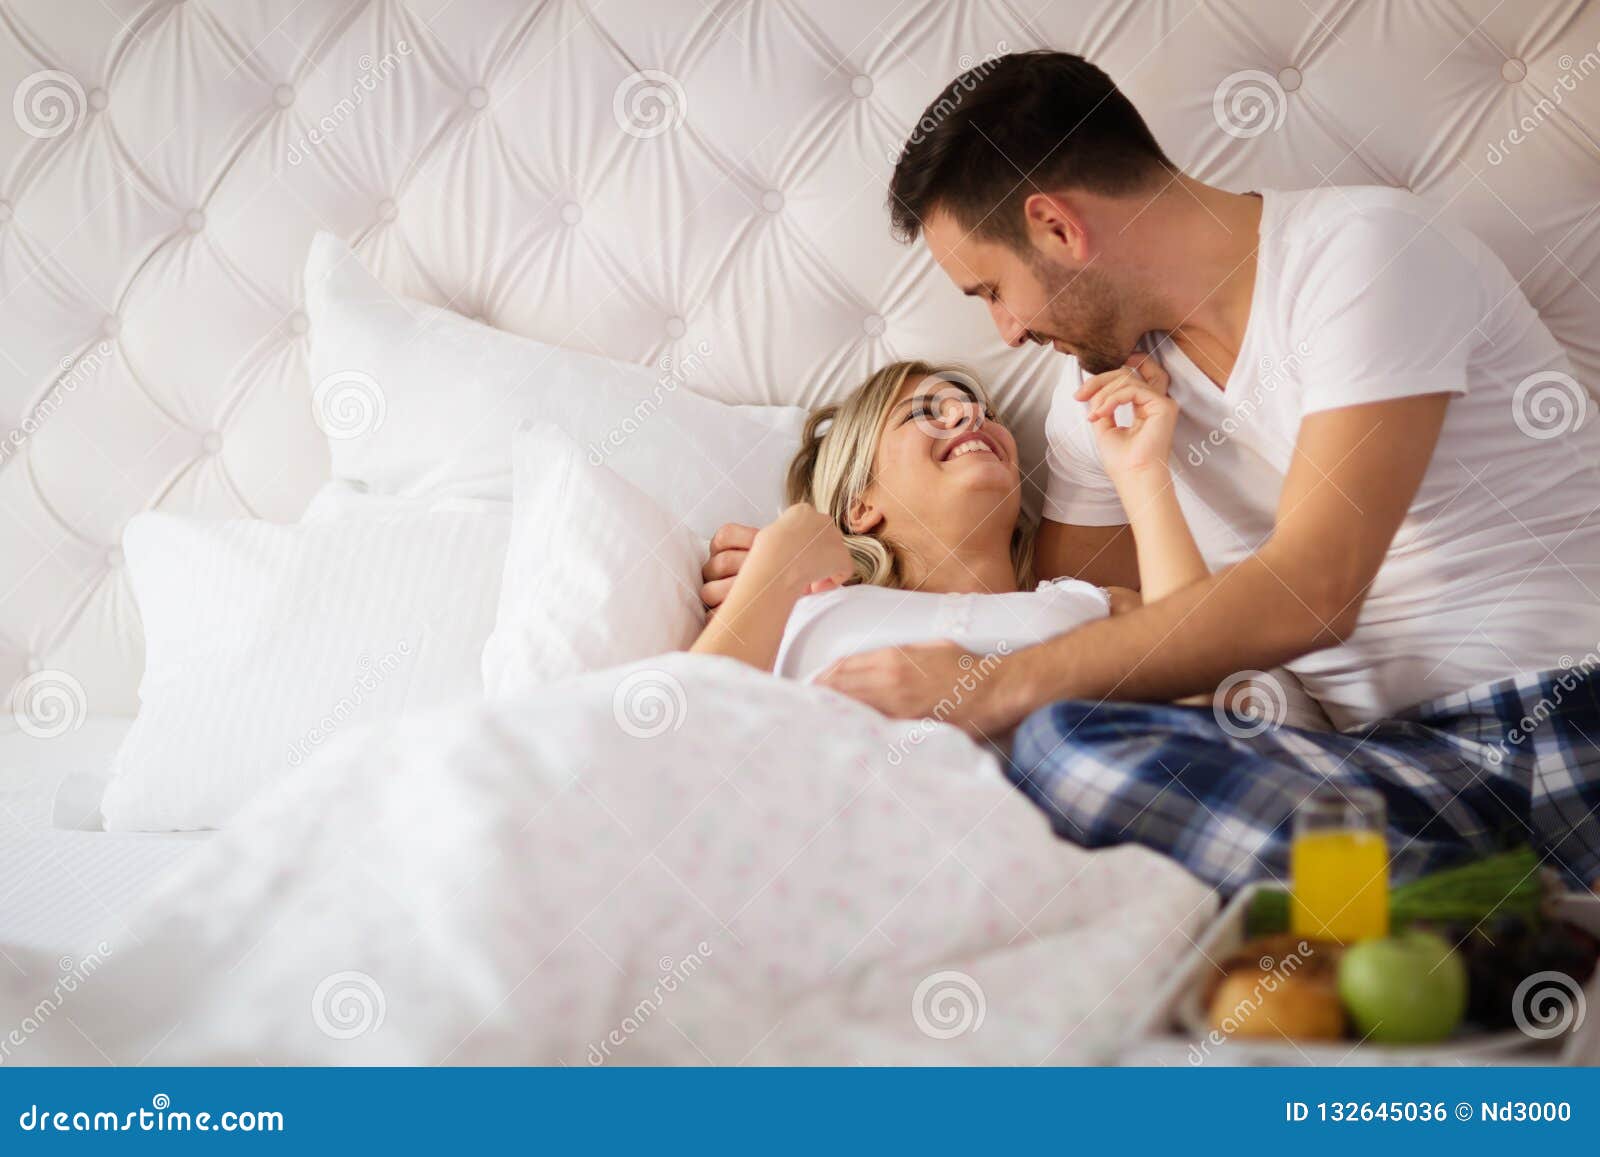 Romantic Husband Waking Wife with Breakfast Stock Photo - Image of ...